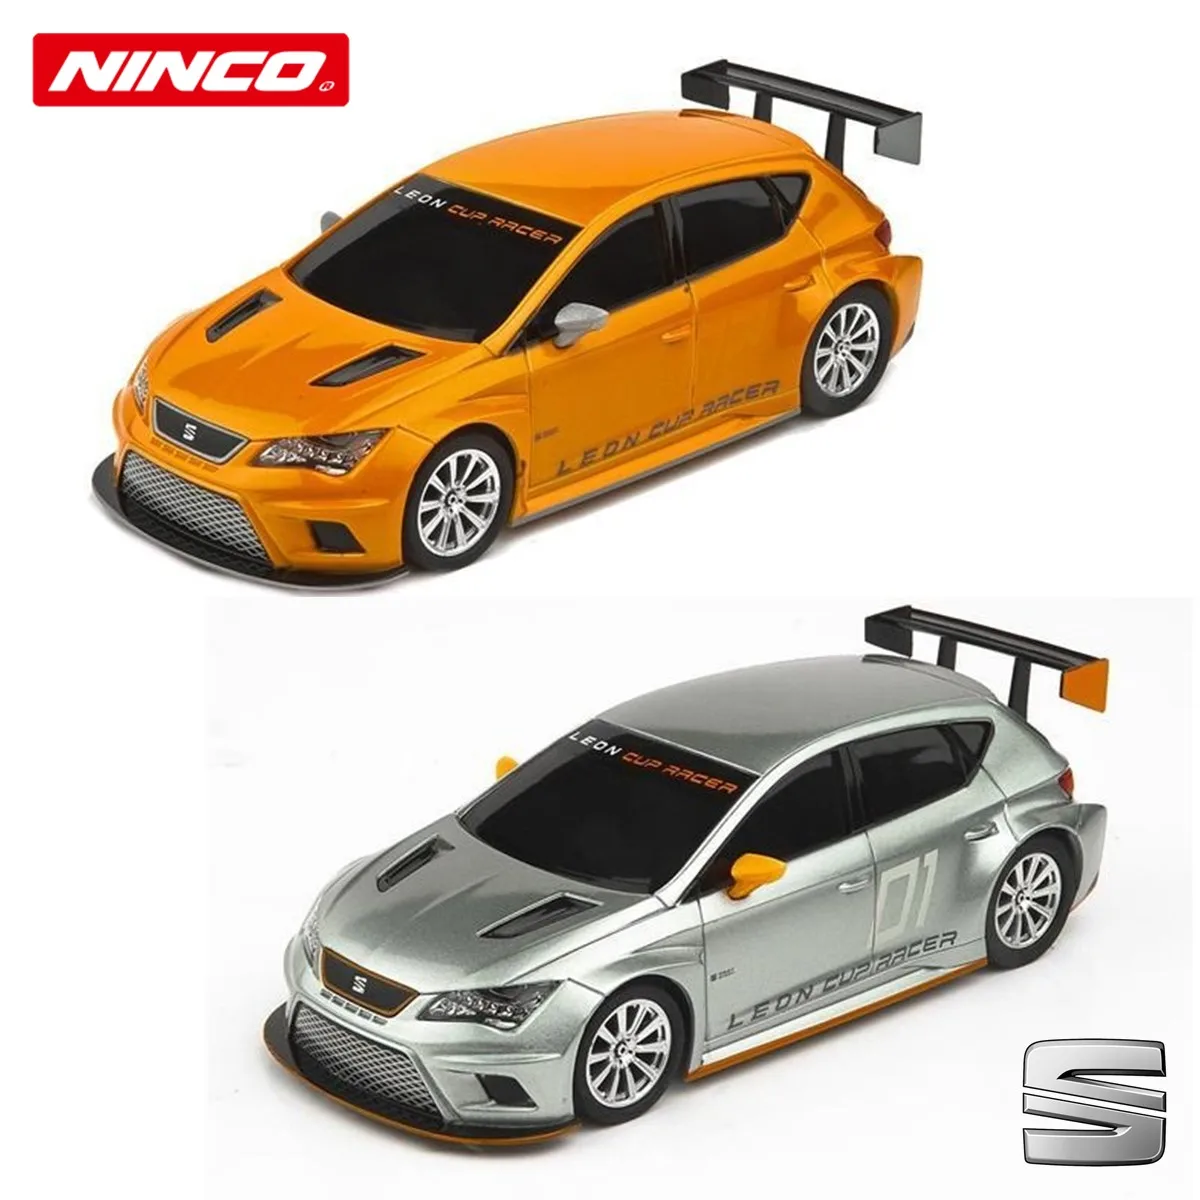 Ninco 1:32 Seat Leon Cup Racer 8,5m Wireless Rennbahn Set Komplett 20189 